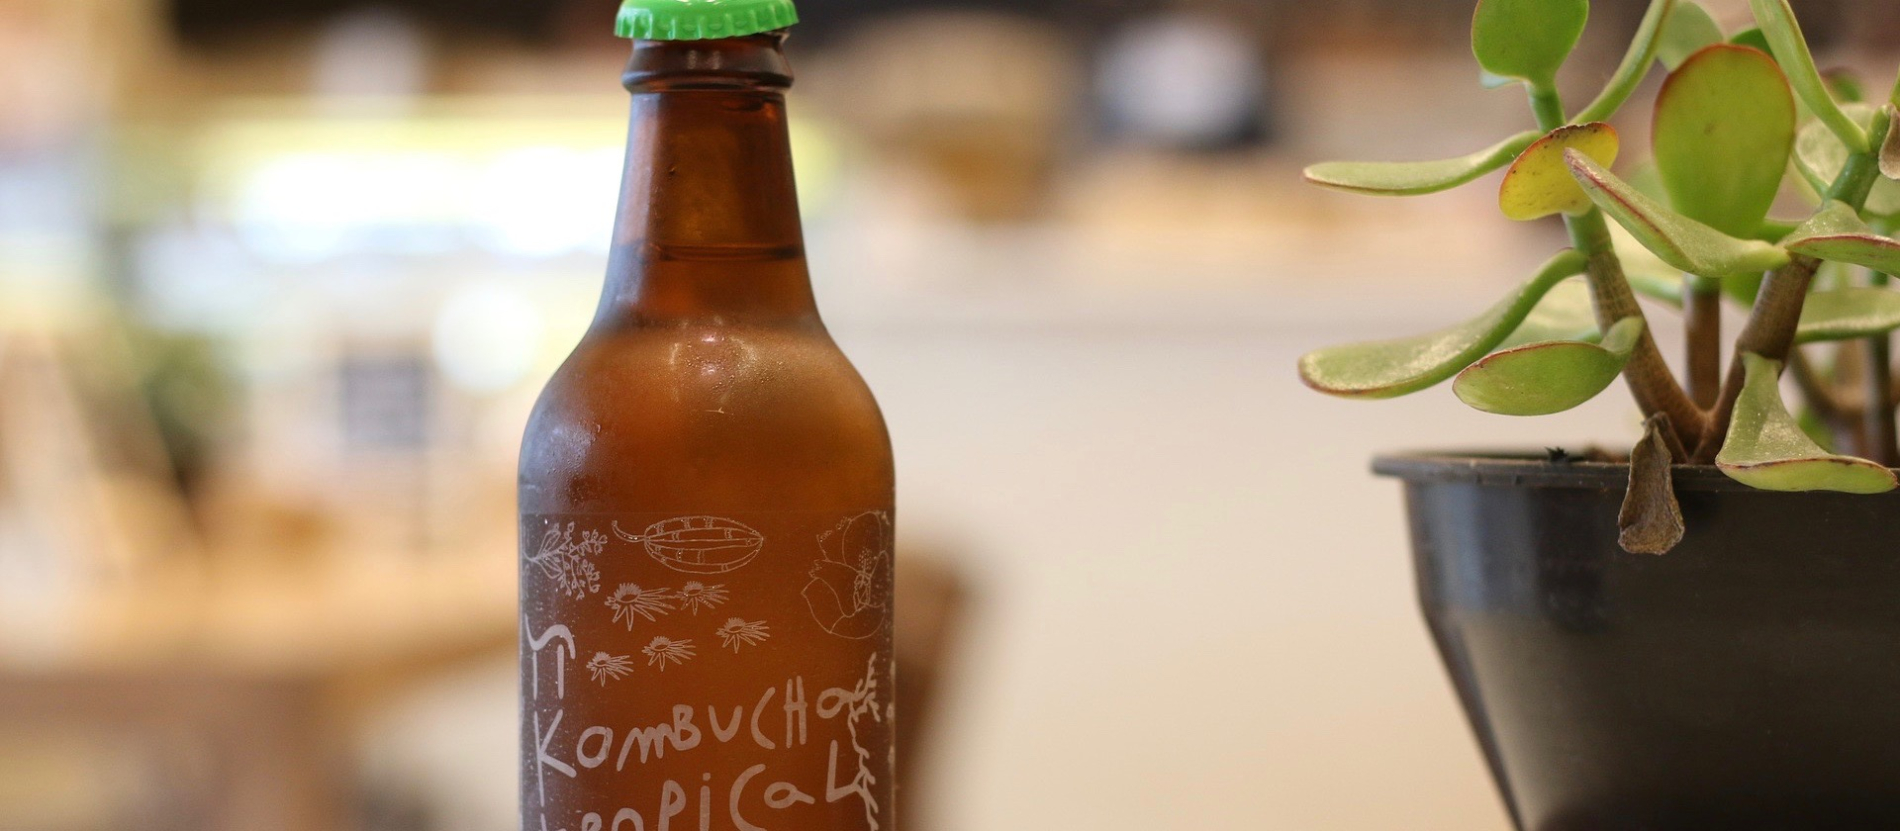 Does Drinking Kombucha Have any Health Benefits? | Office for Science and  Society - McGill University